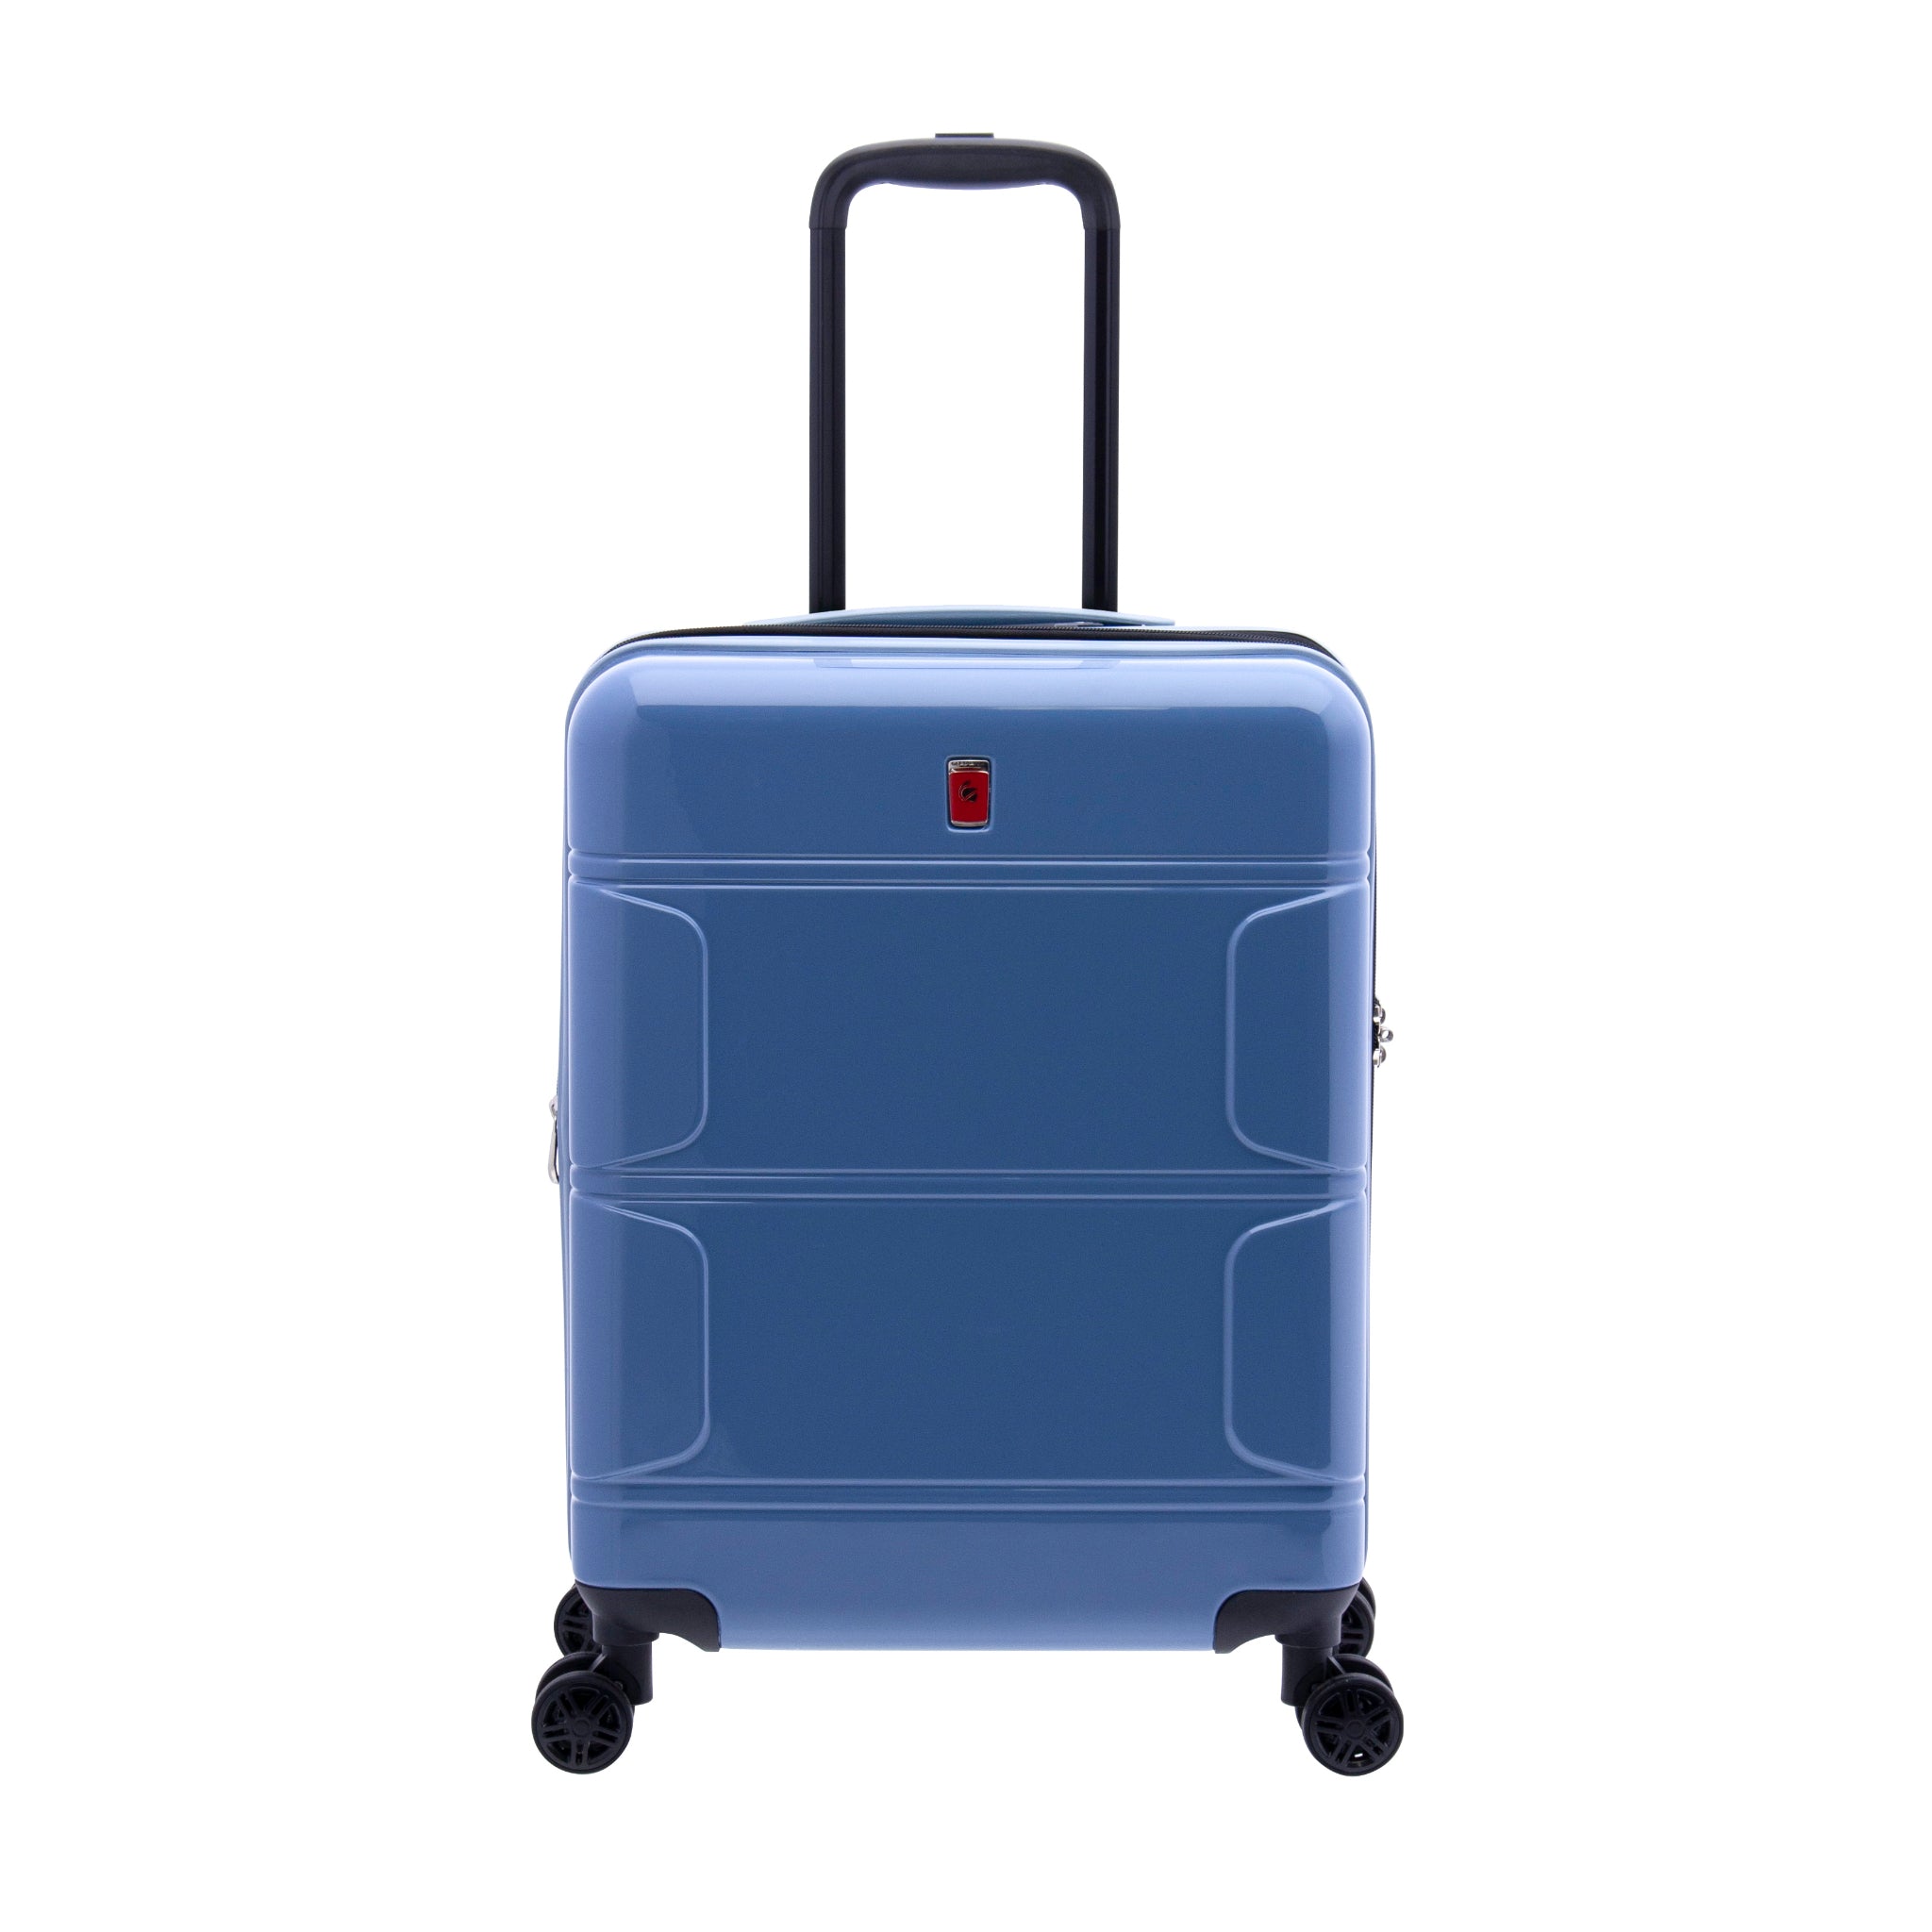 Mochila-maleta Extensible de viaje cabina Vogart Camper (34x55x20